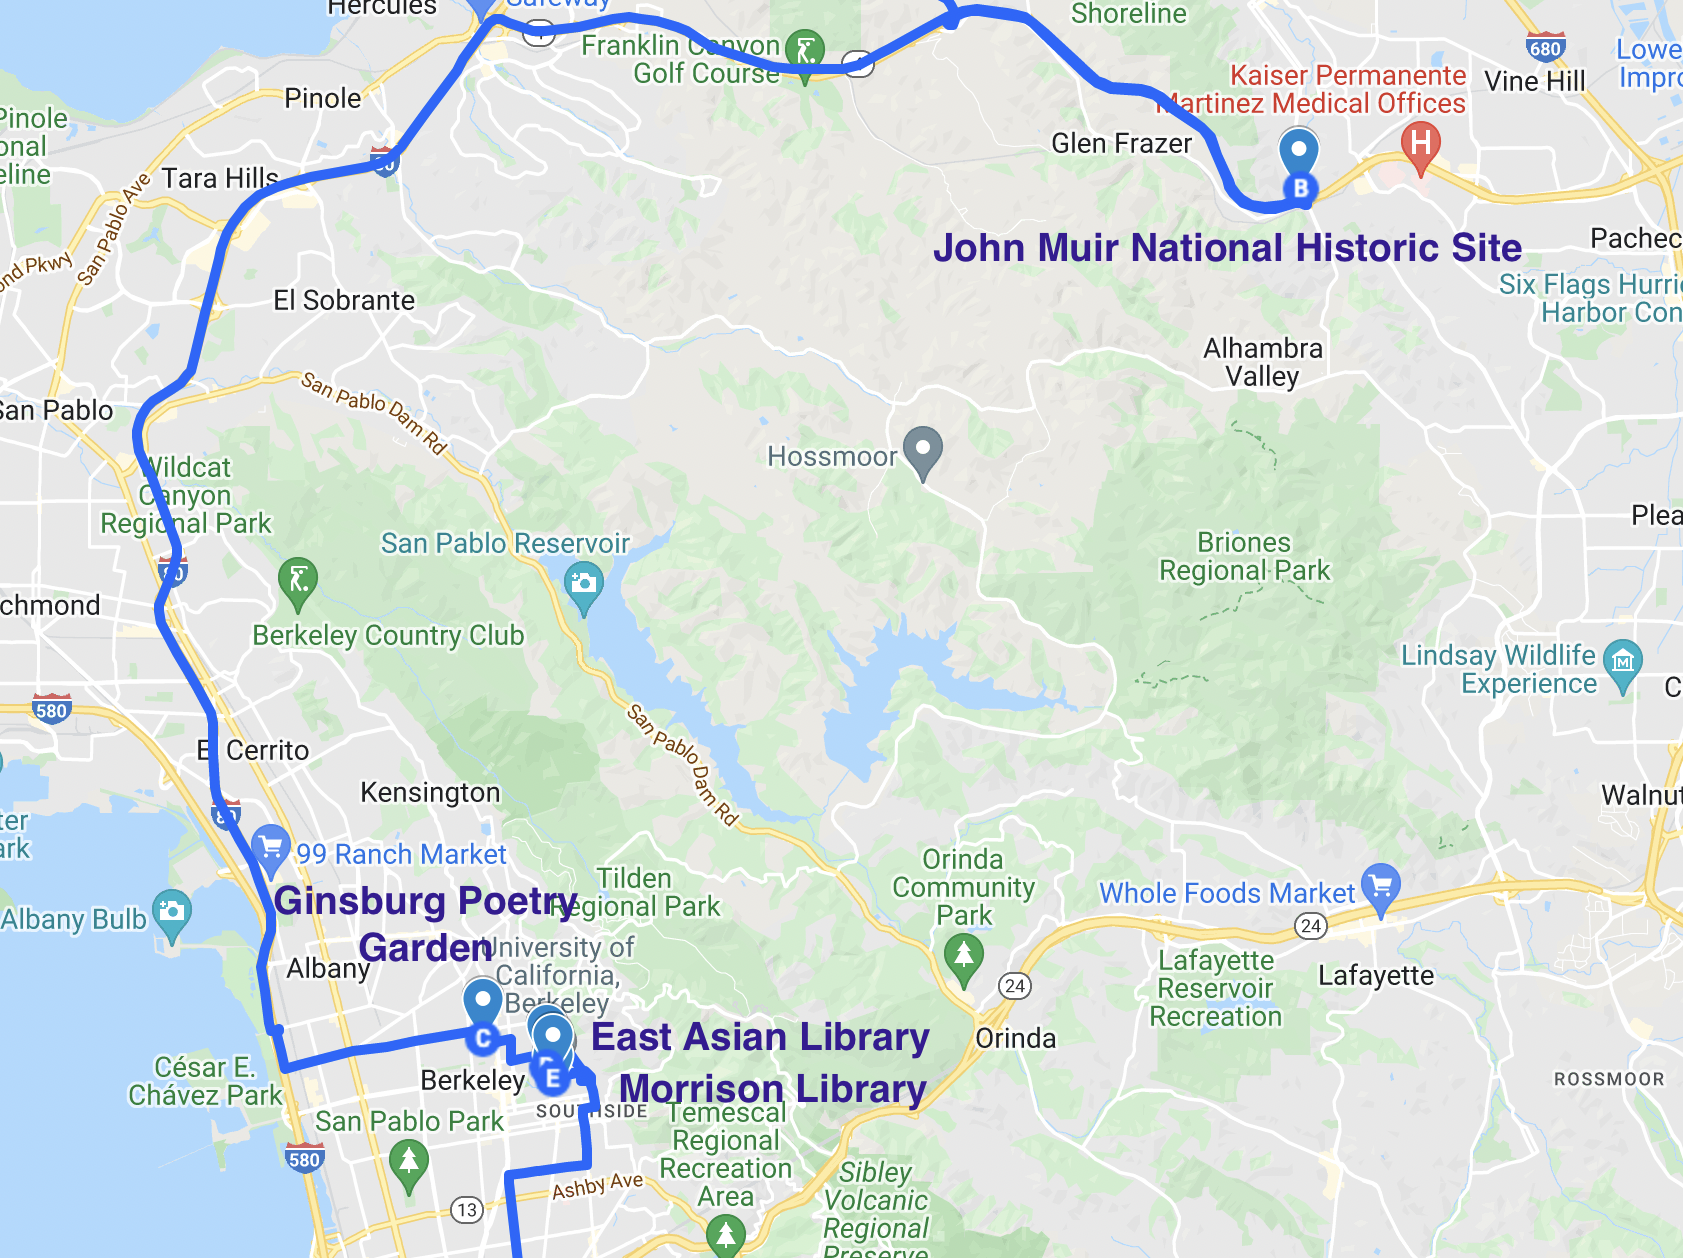 map of literary stops in Martinez and Berkeley California